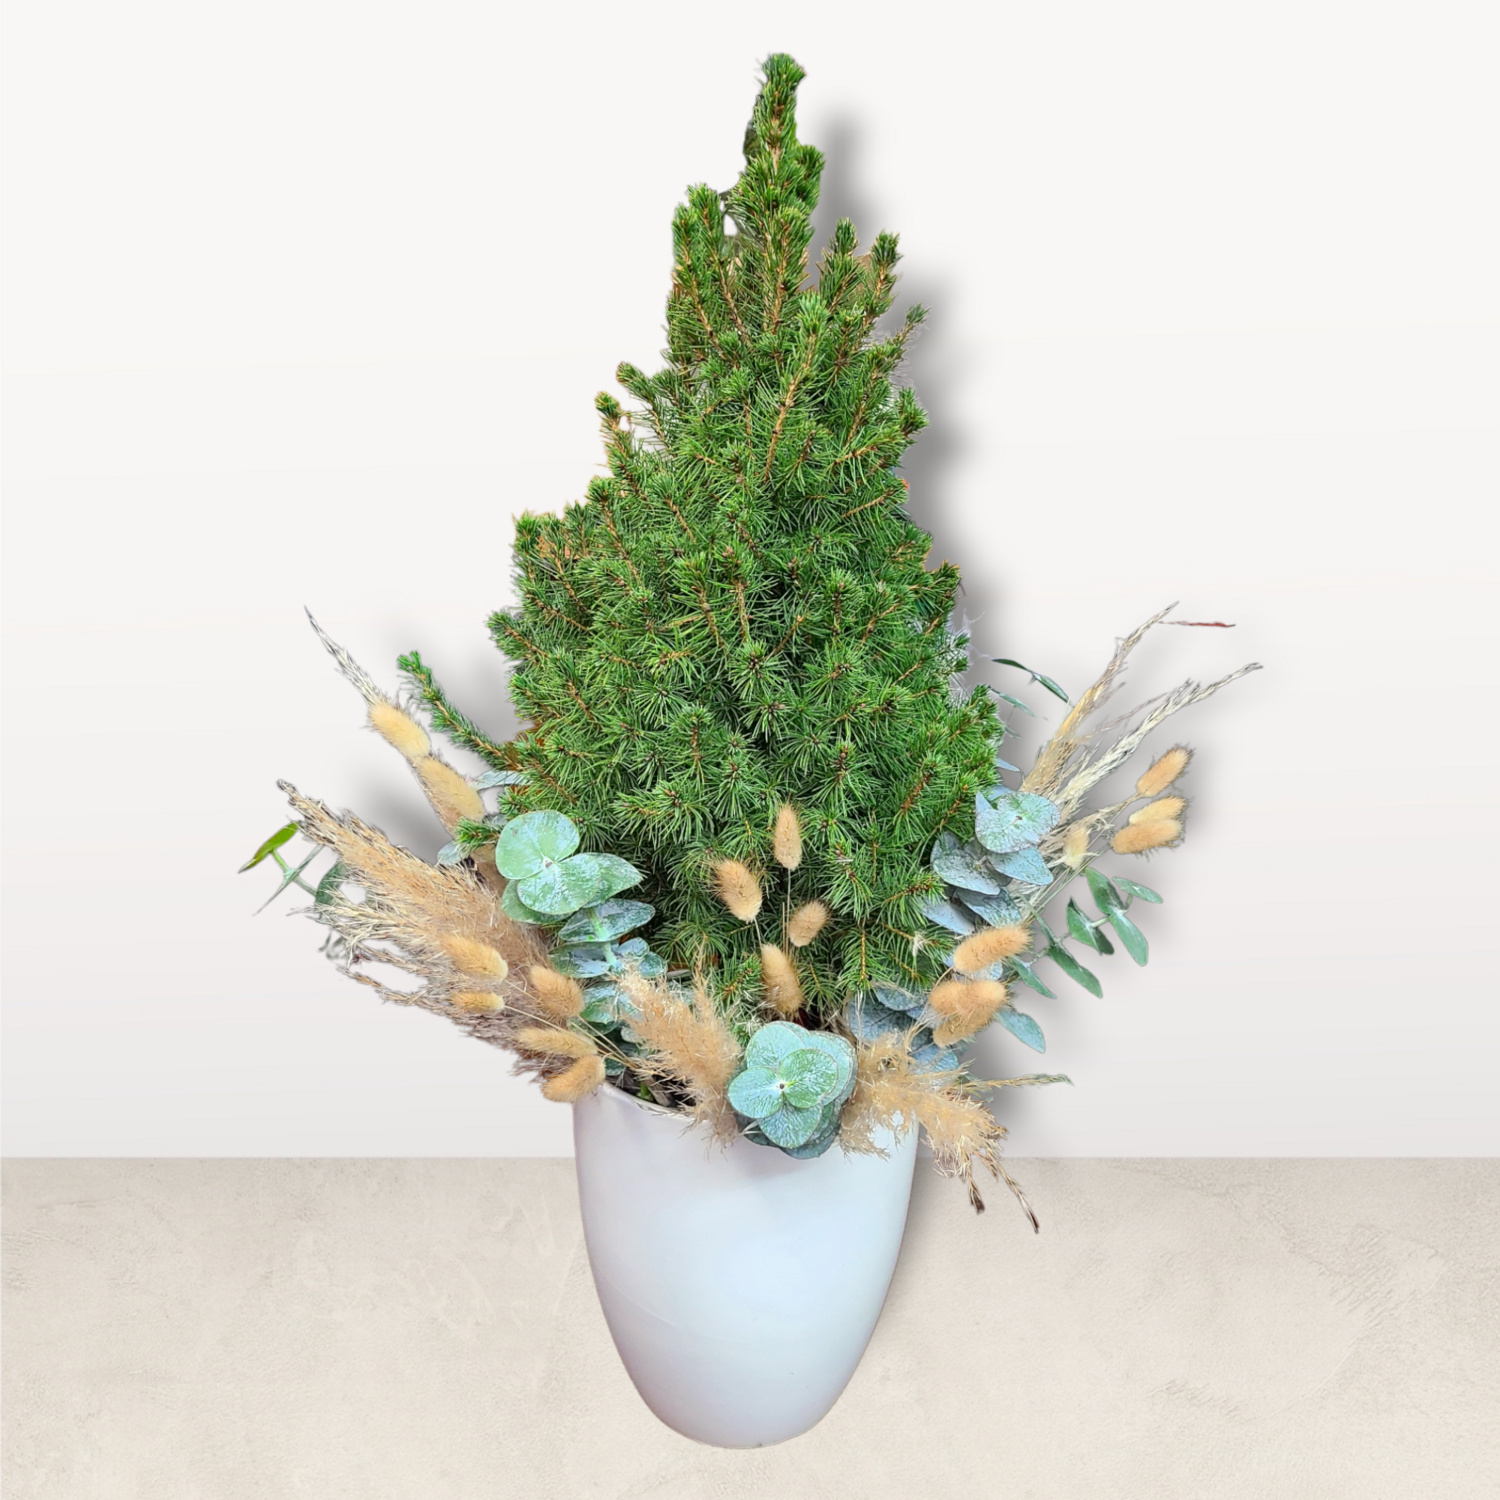 3’ Living Christmas Tree With Natural Decor